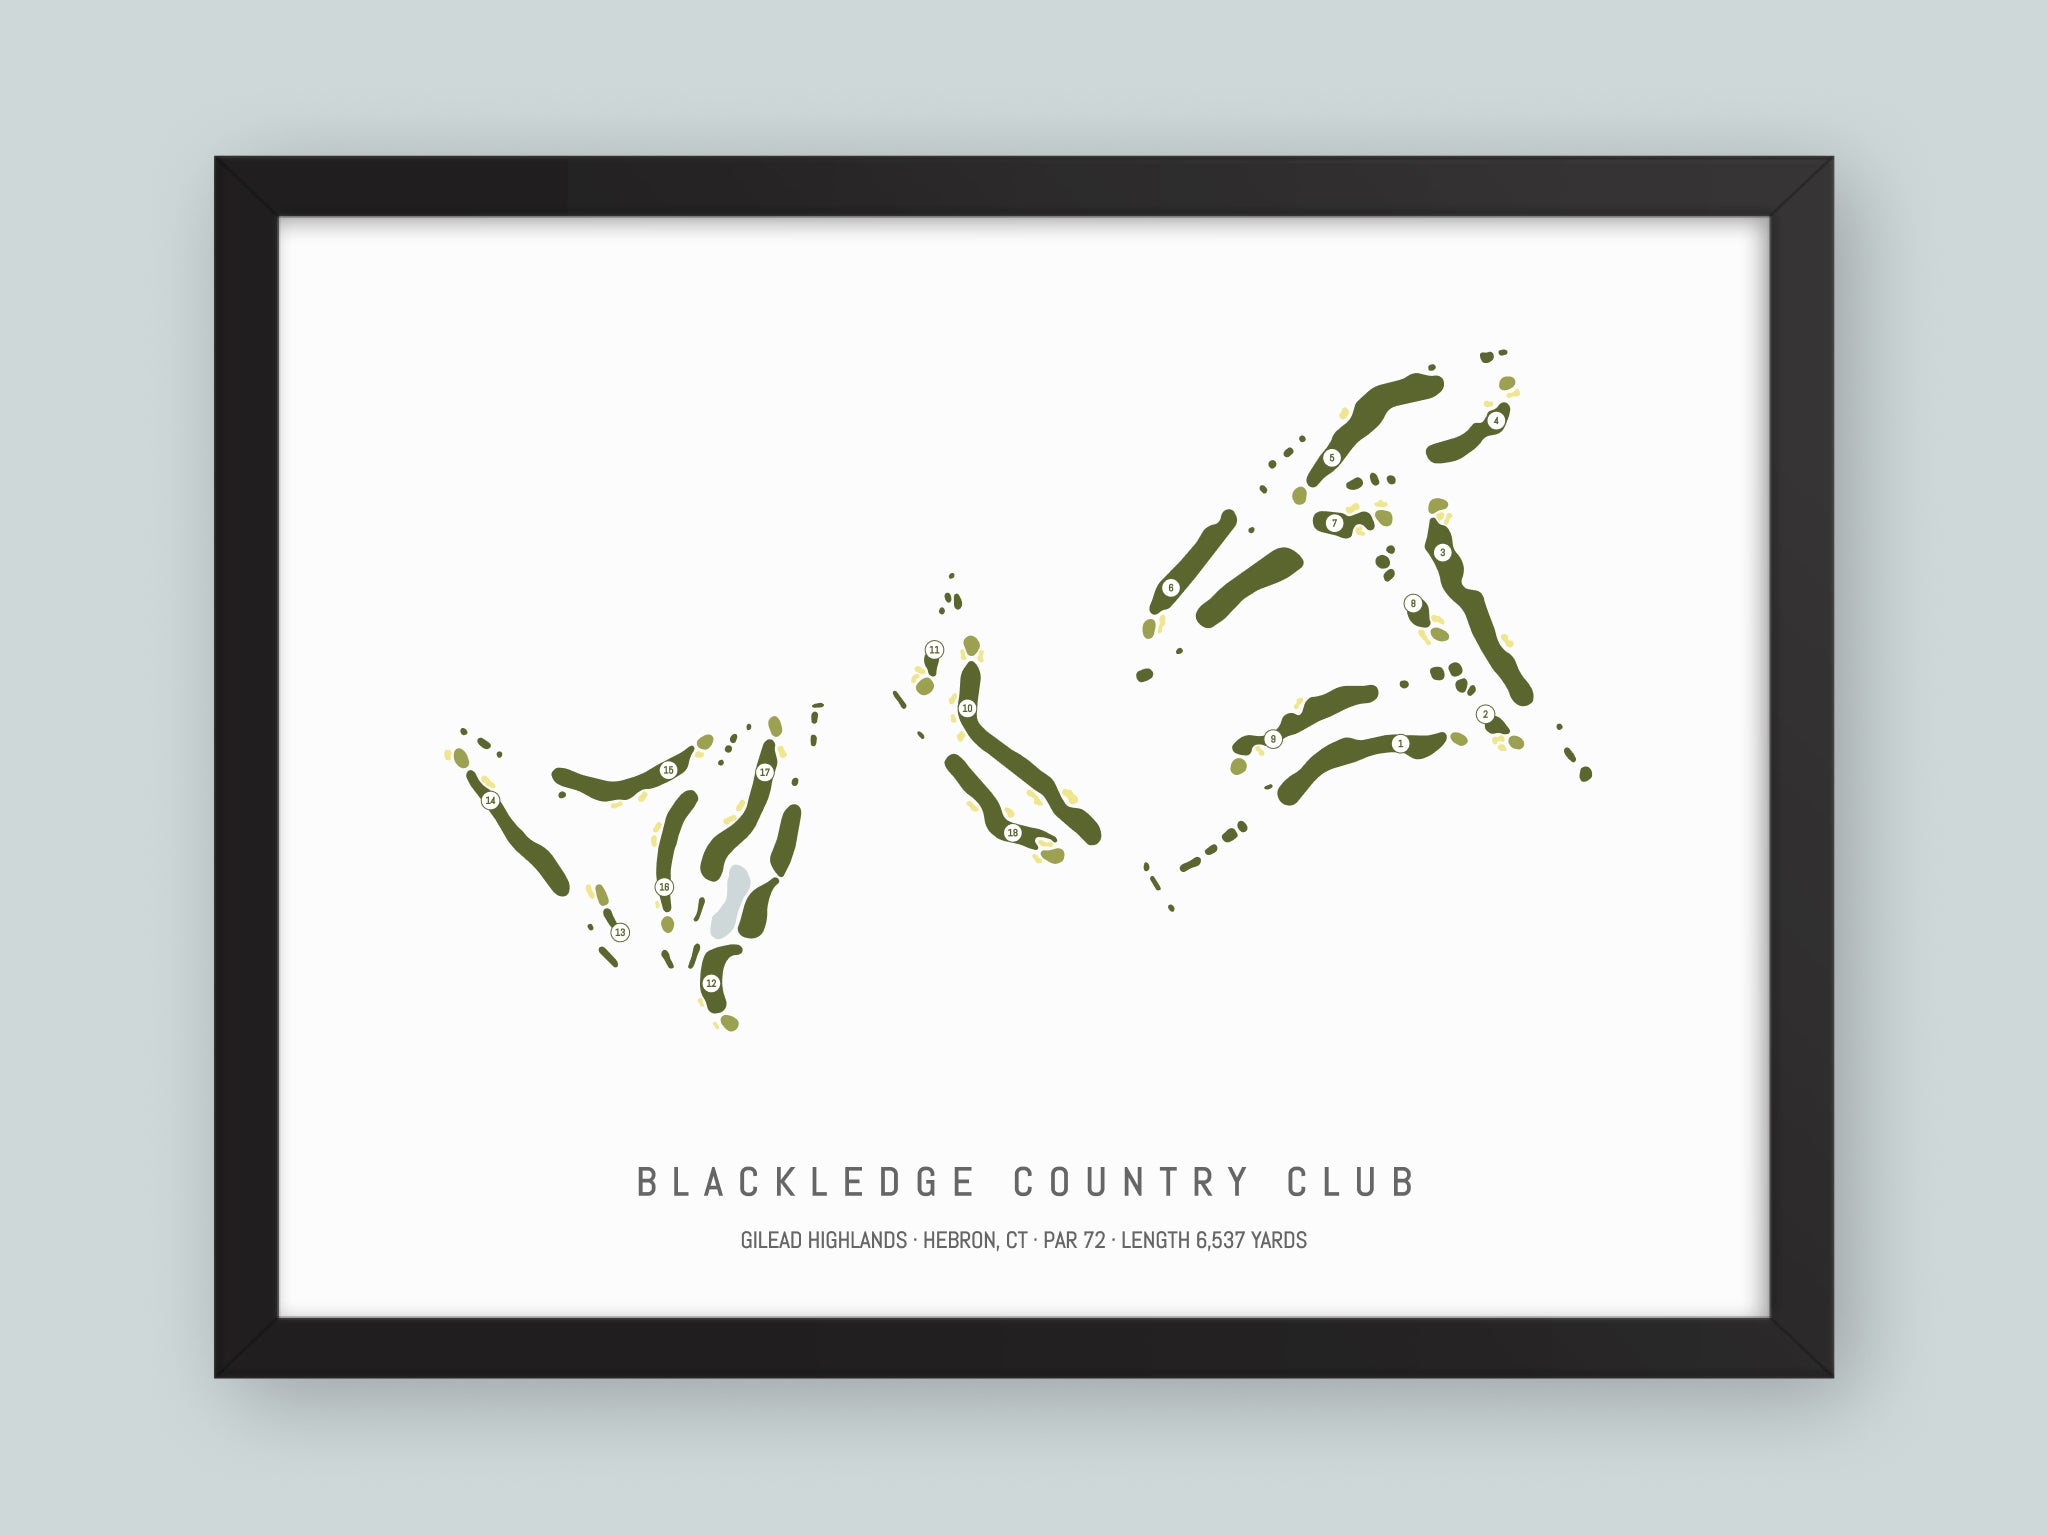 Blackledge Country Club - Gilead Highlands